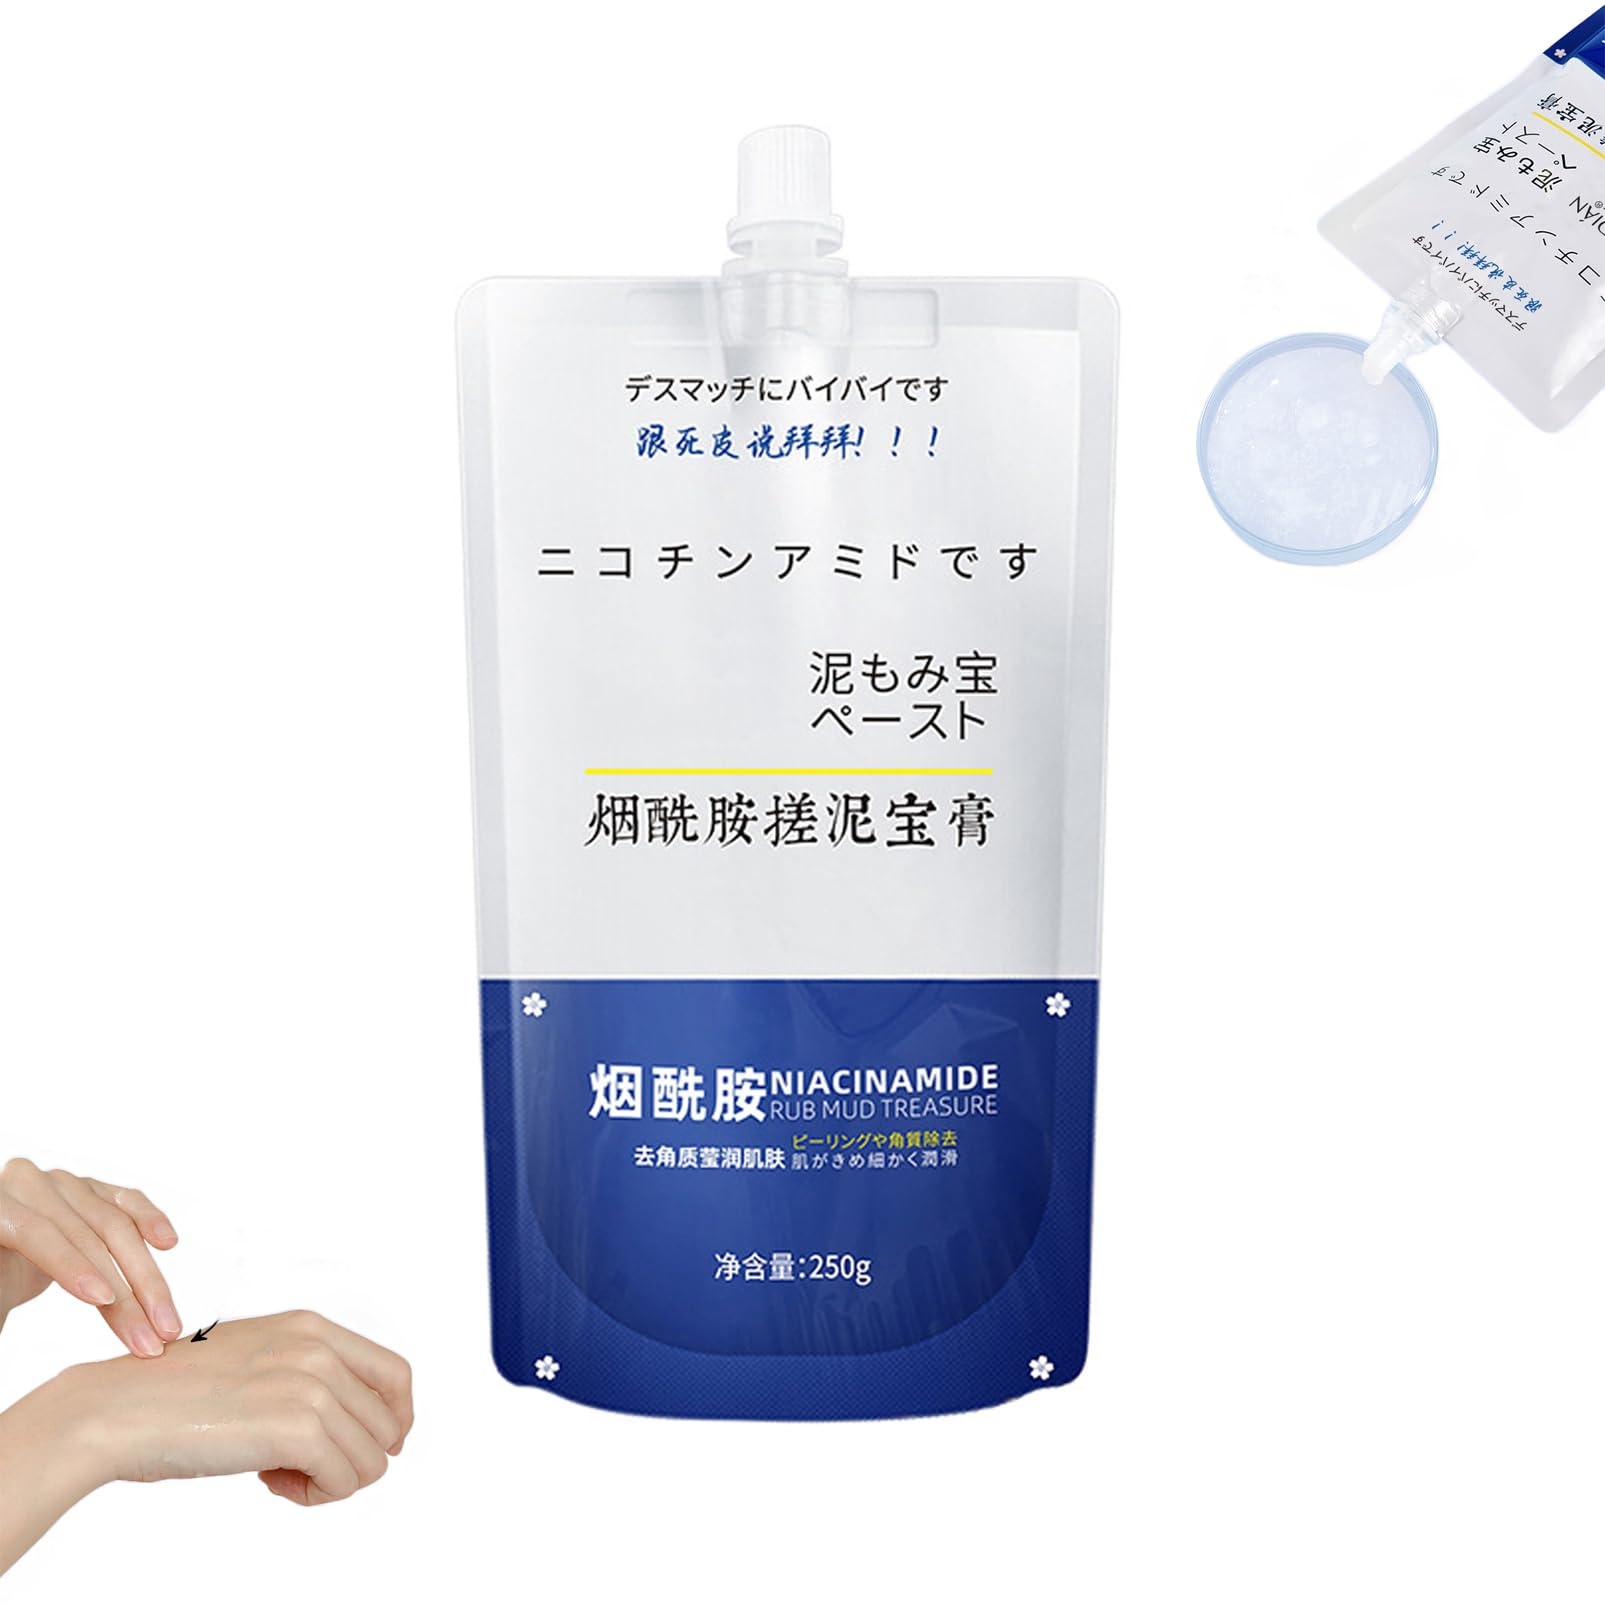 [Instant Whitening] Body Exfoliating Nicotinamide Gel,Heykomi Mud Cream,Japan Cleansing Exfoliating,250g Amide Clay Cream,Mud Rubbing Treasure (Pack of 1Pcs)